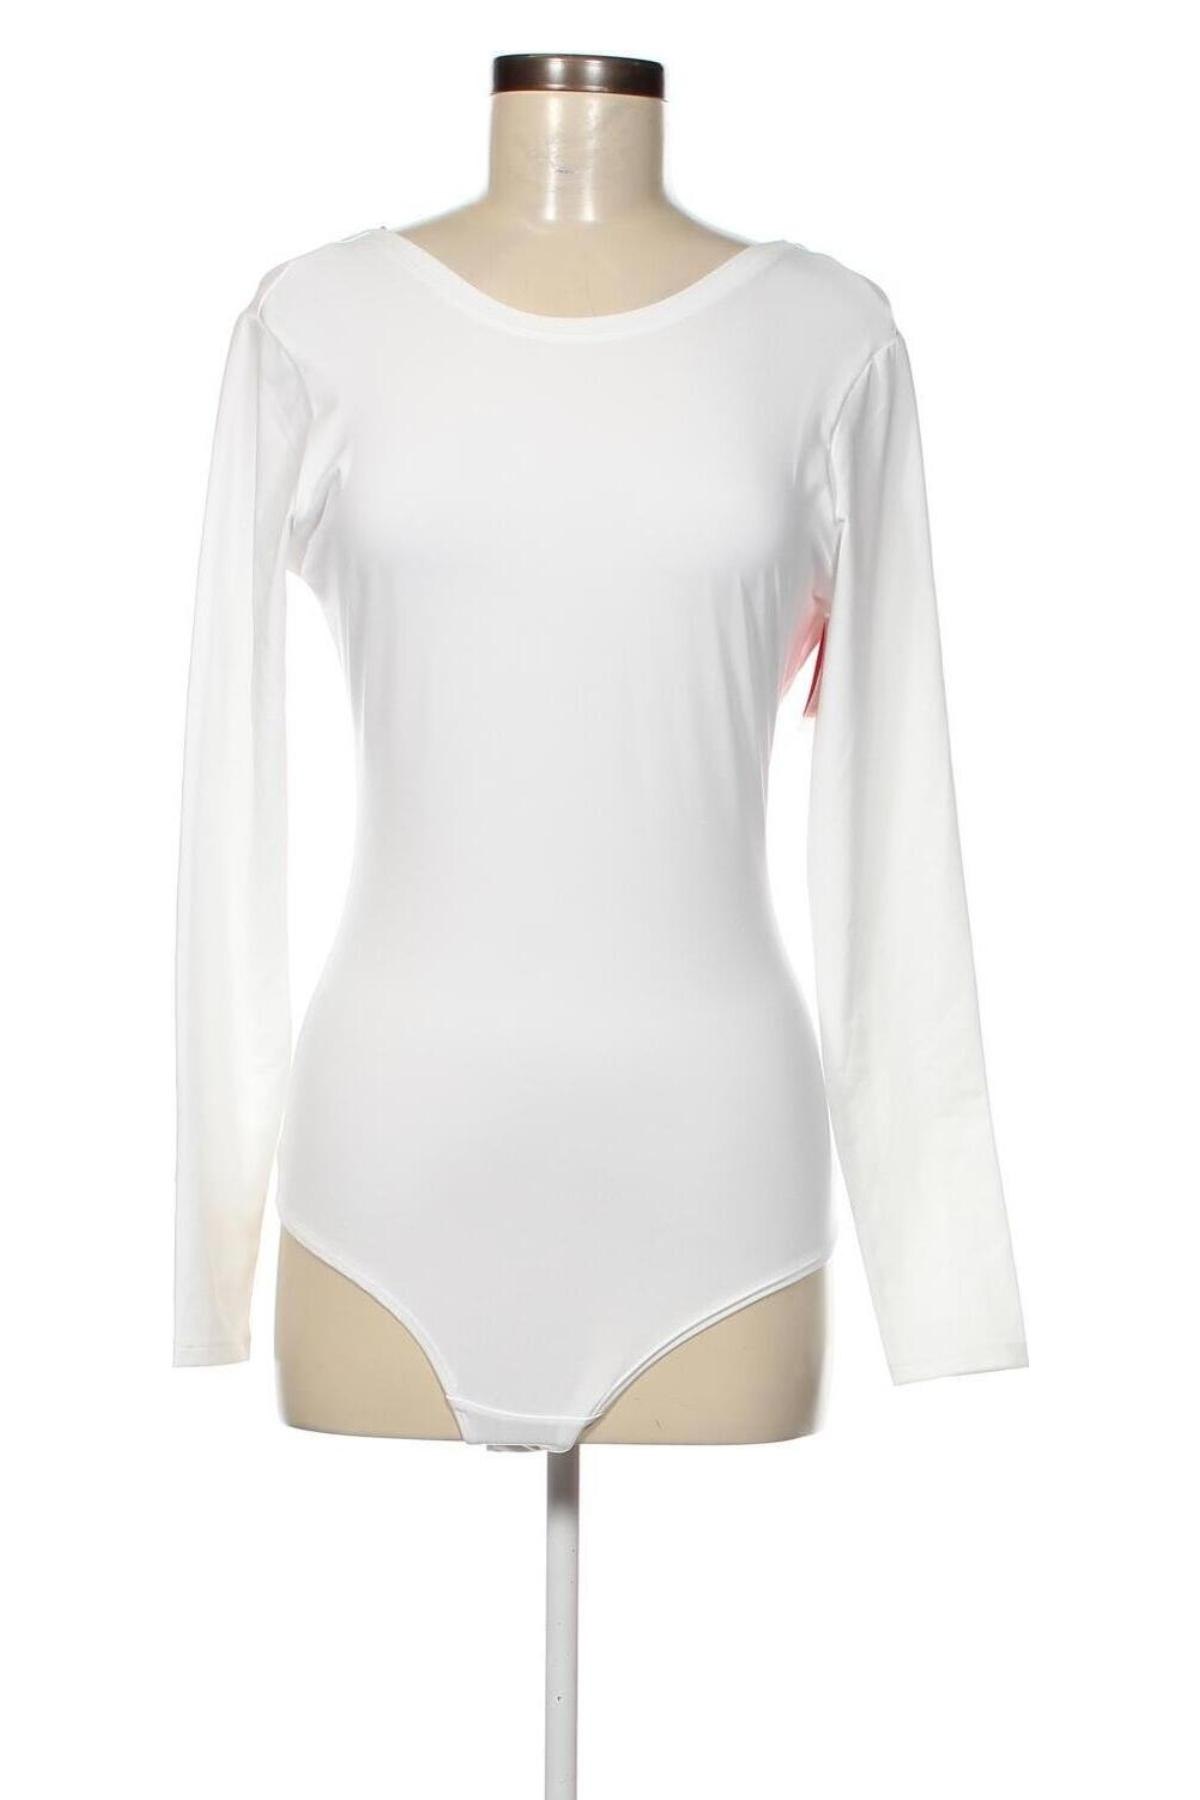 Bodysuit Spanx by Sara Blakely, Μέγεθος L, Χρώμα Λευκό, Τιμή 25,23 €